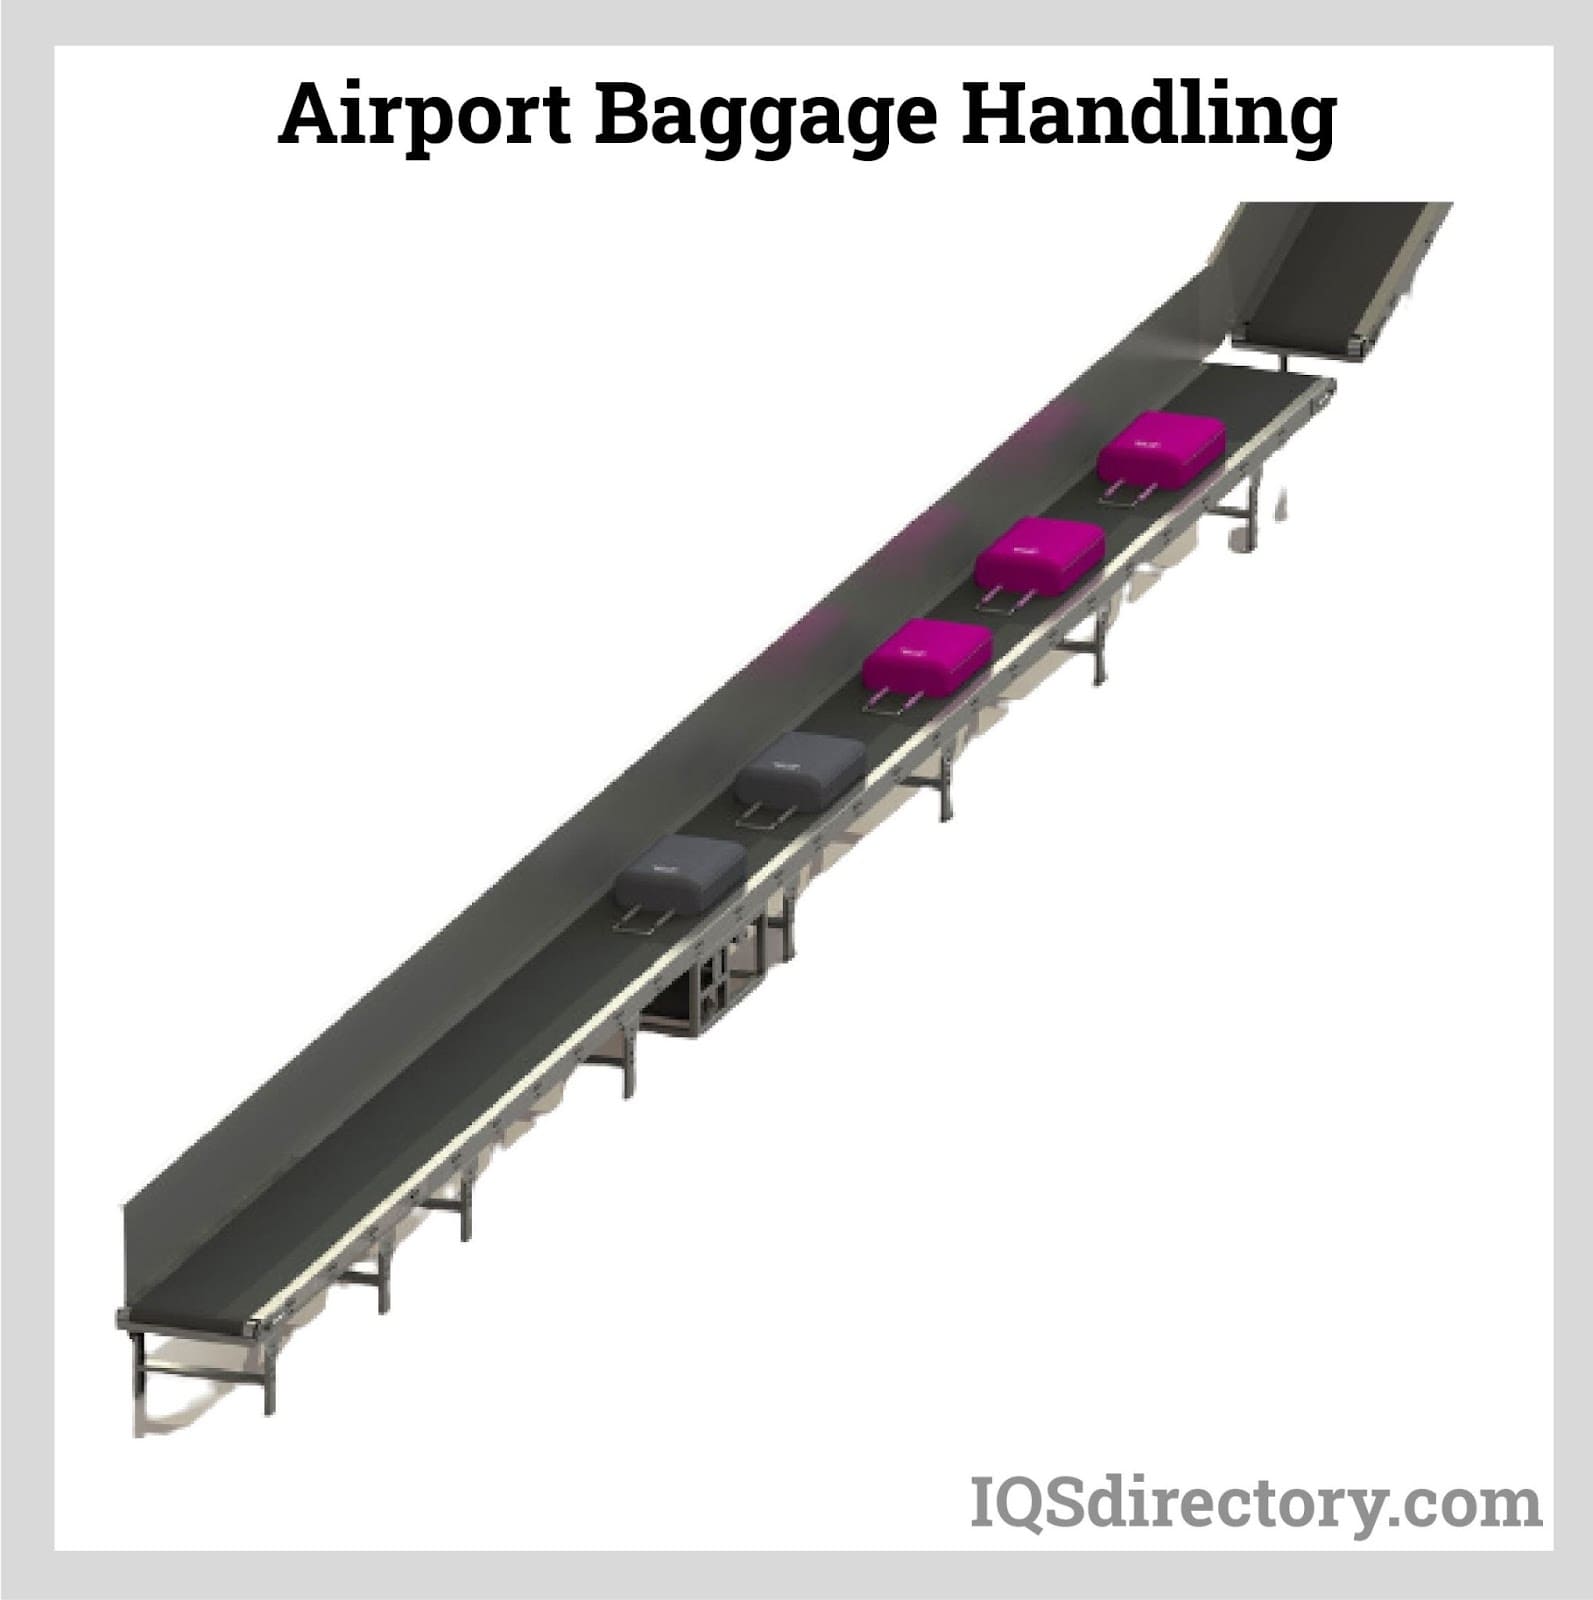 Airport Baggage Handling